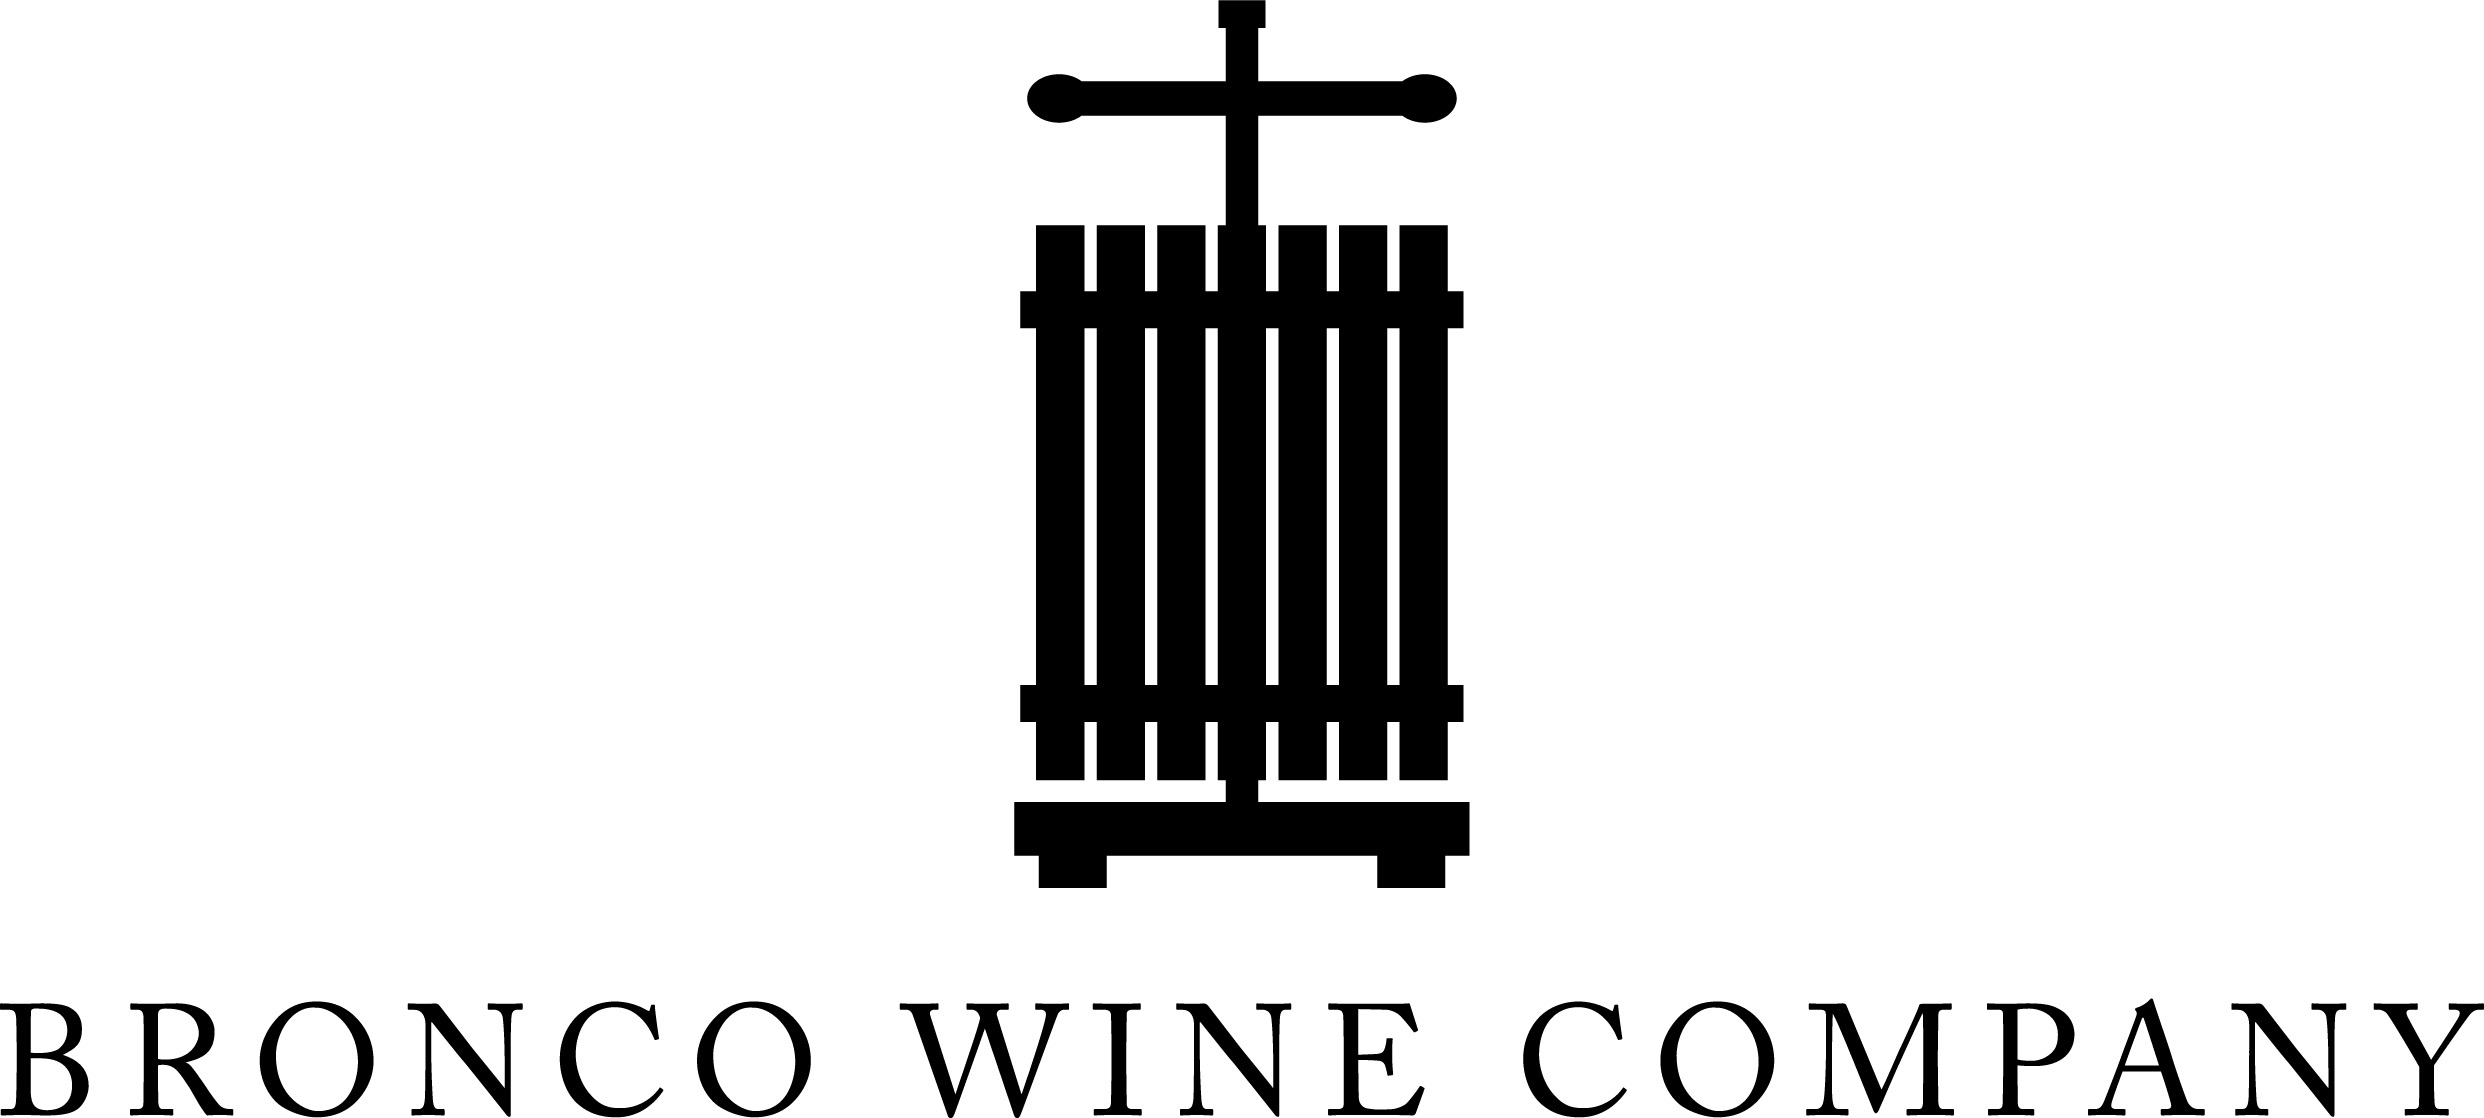 bronco wines logo.jpg